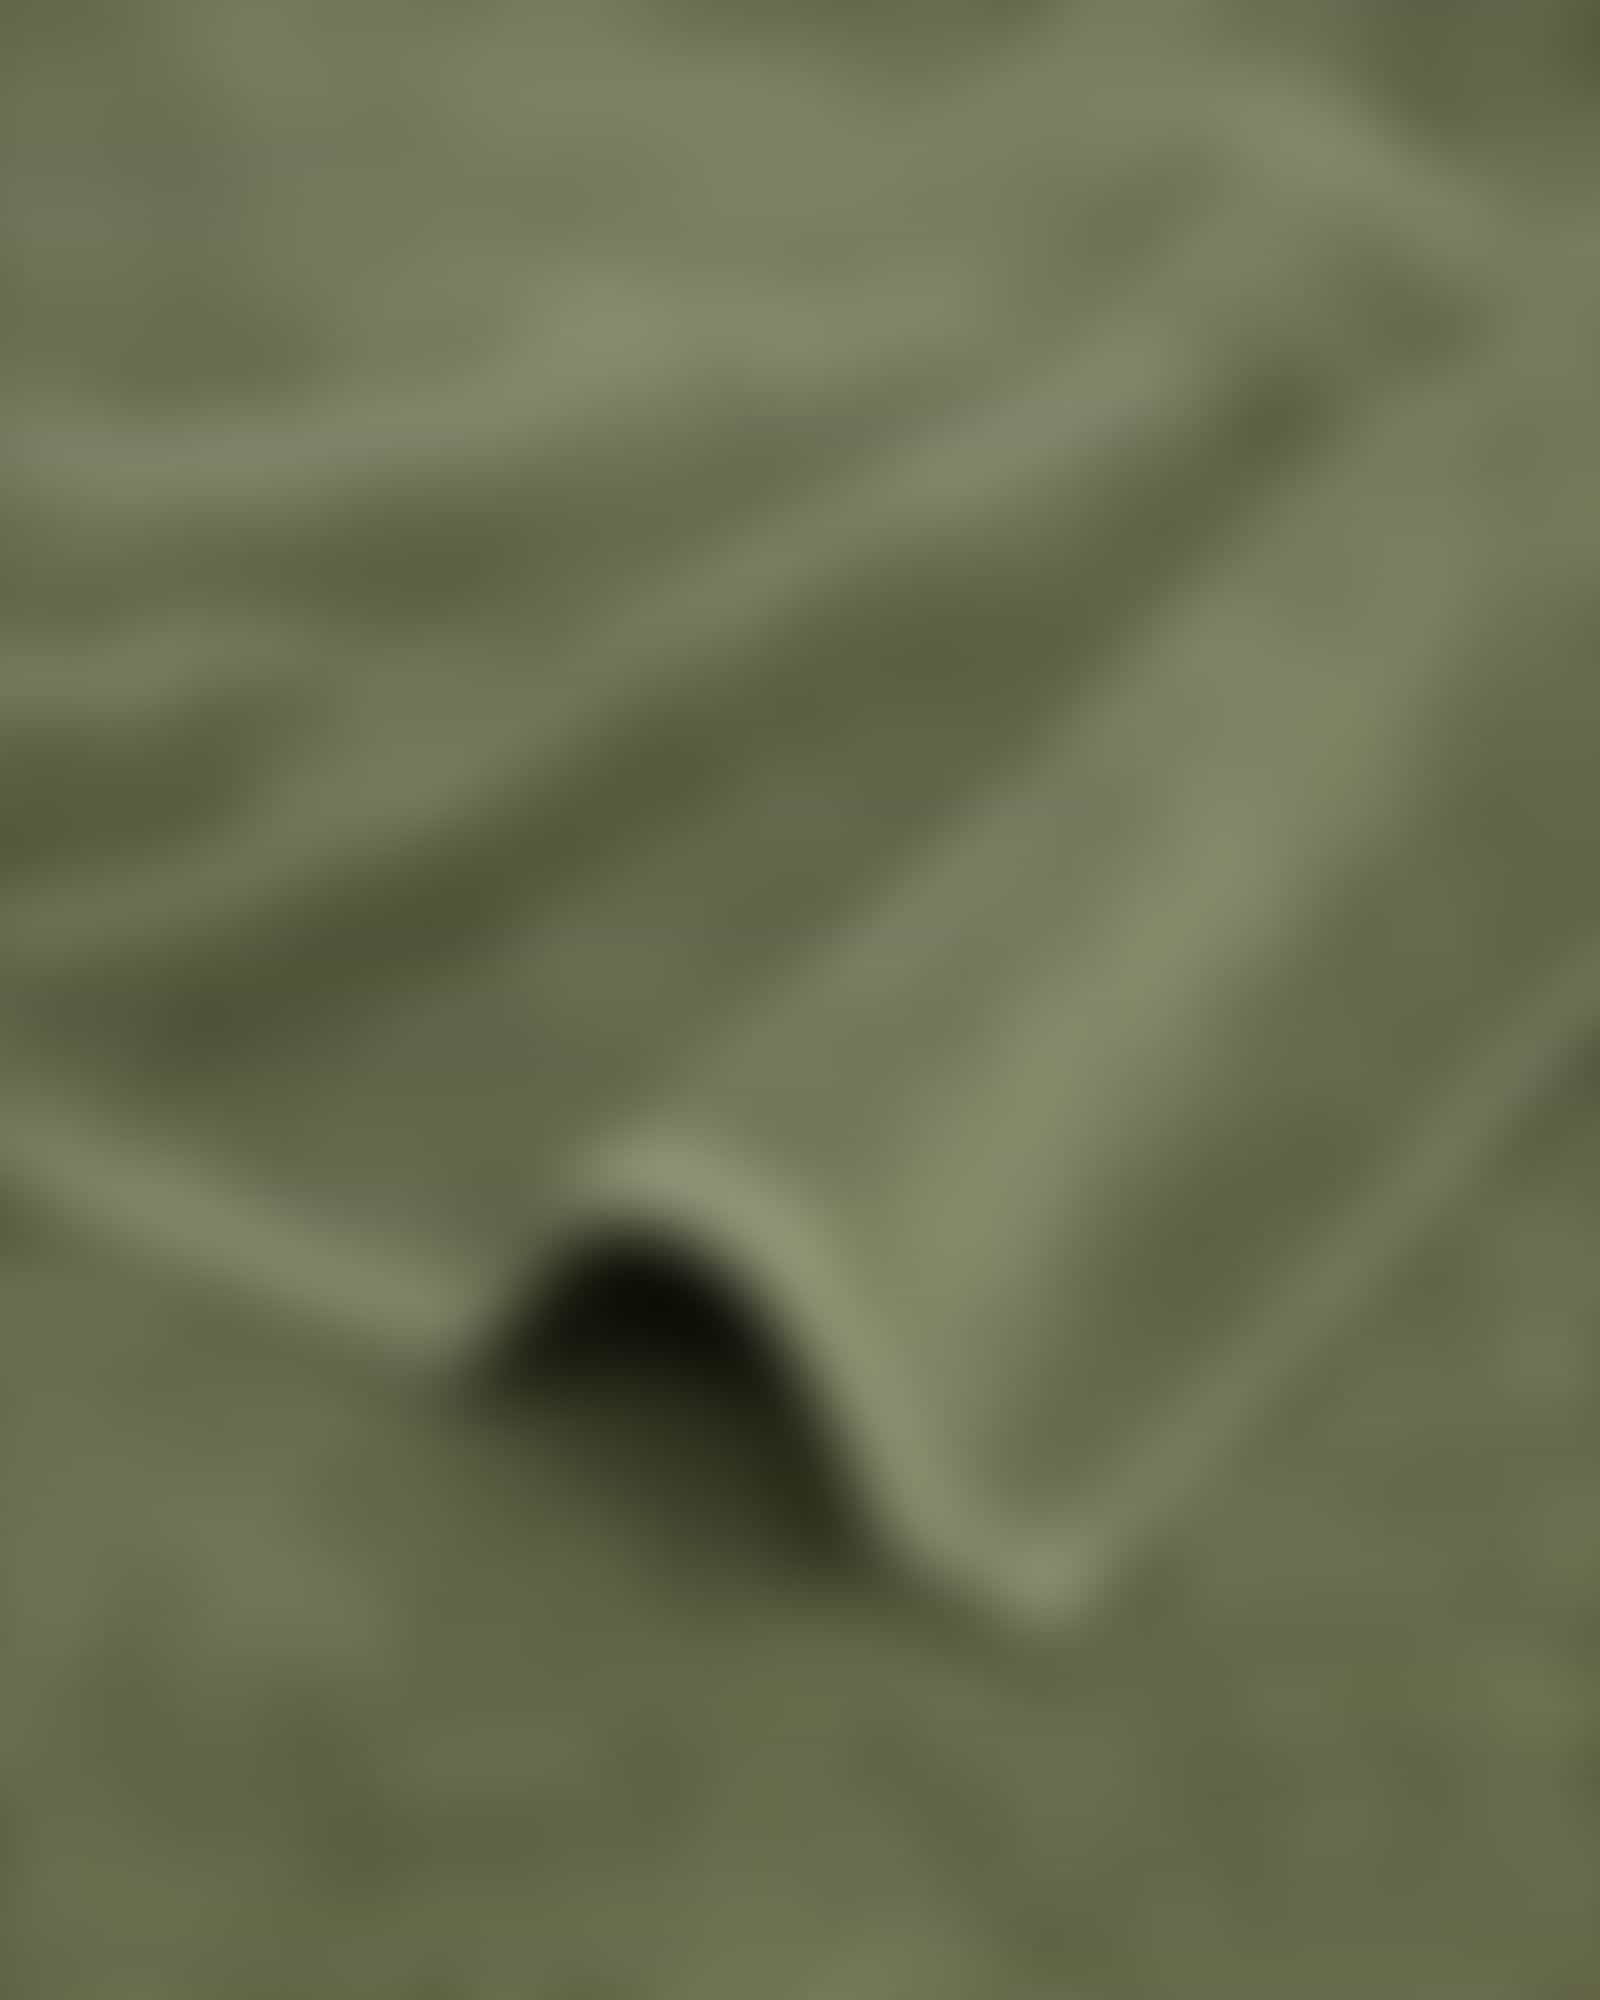 Cawö Heritage 4000 - Farbe: field - 453 - Waschhandschuh 16x22 cm